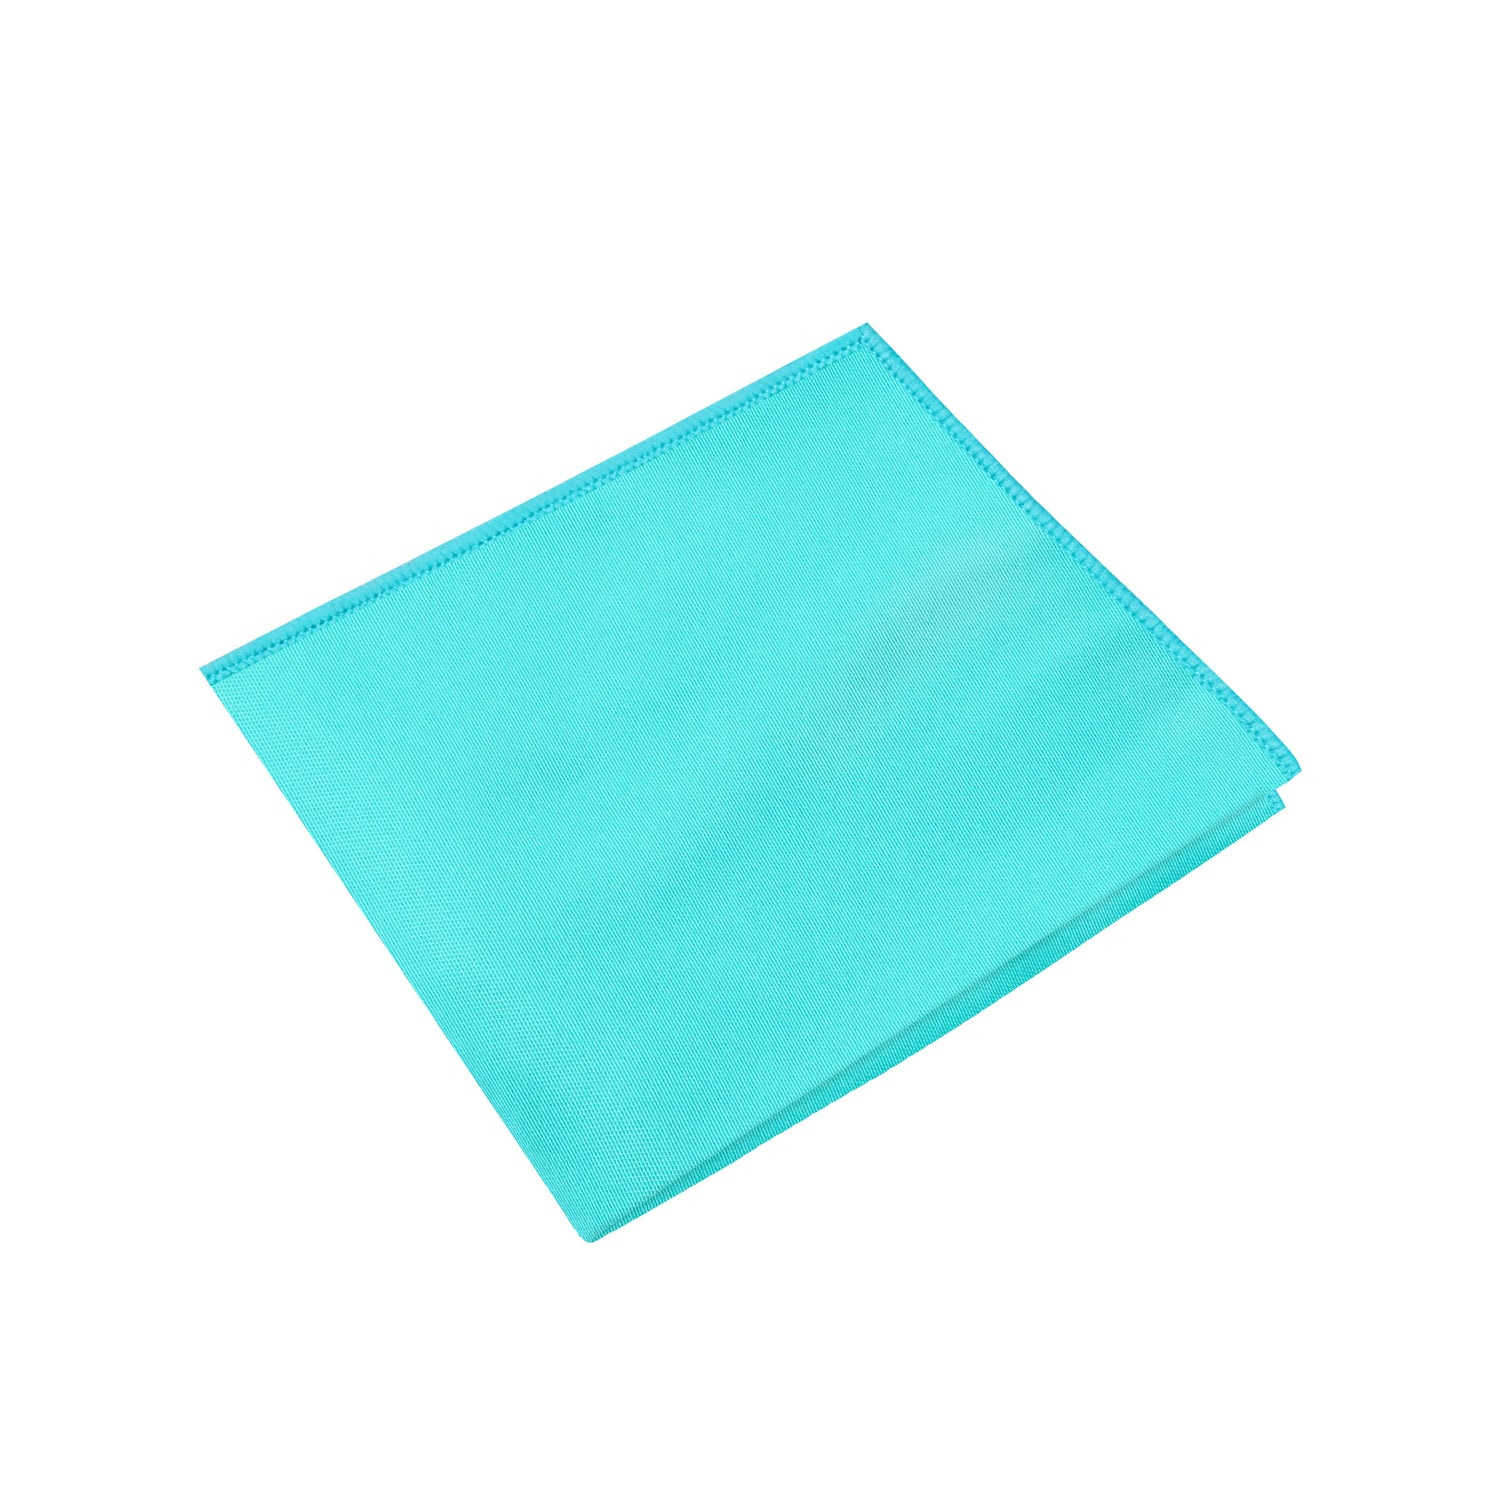 Mint With Aqua Edge Pocket Square